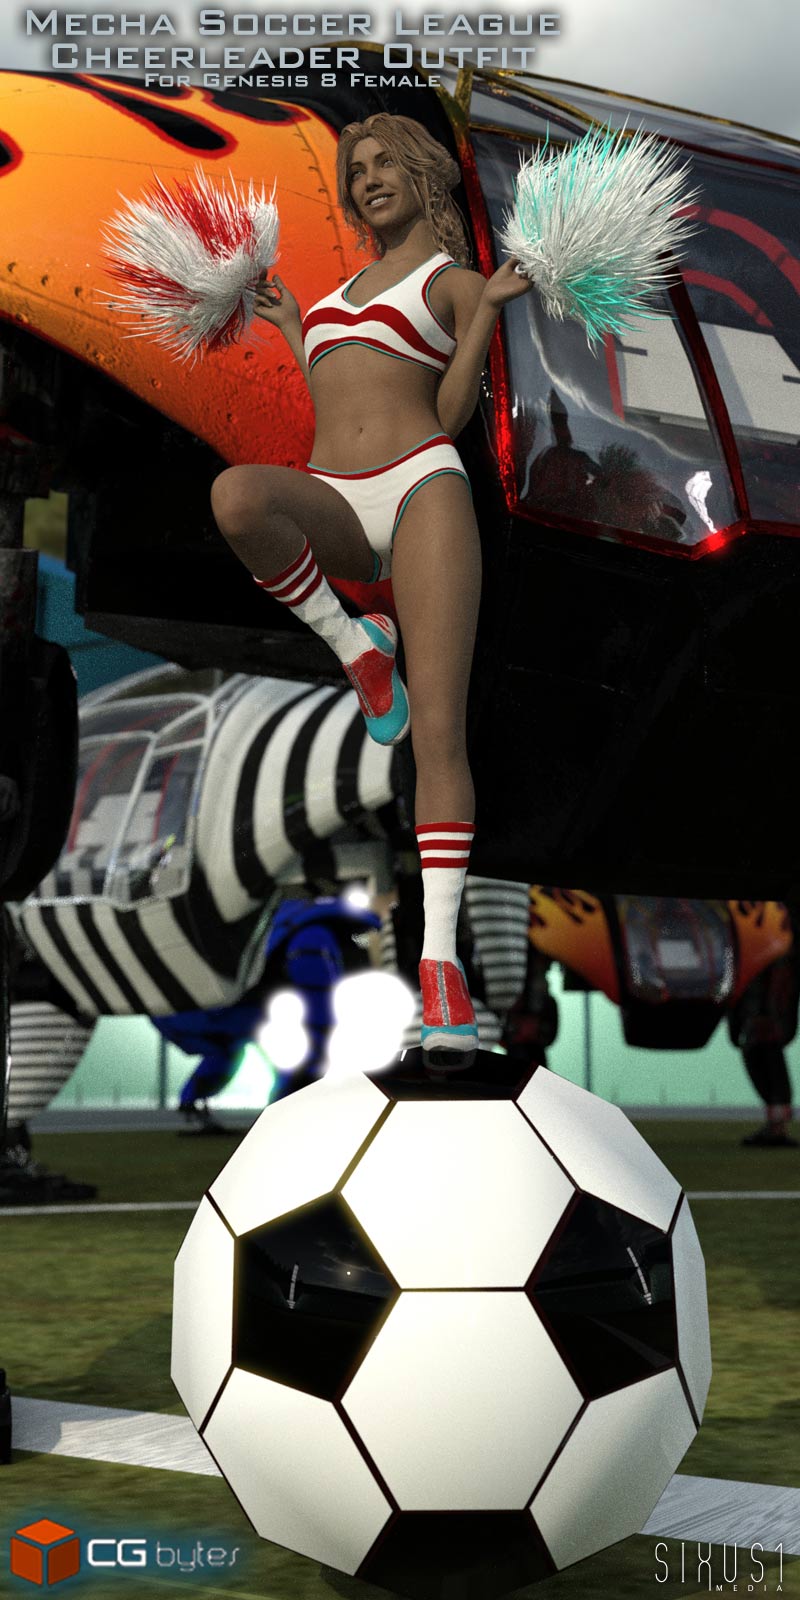 ArtDev Mecha Soccer League Cheerleader Outfit For G8F